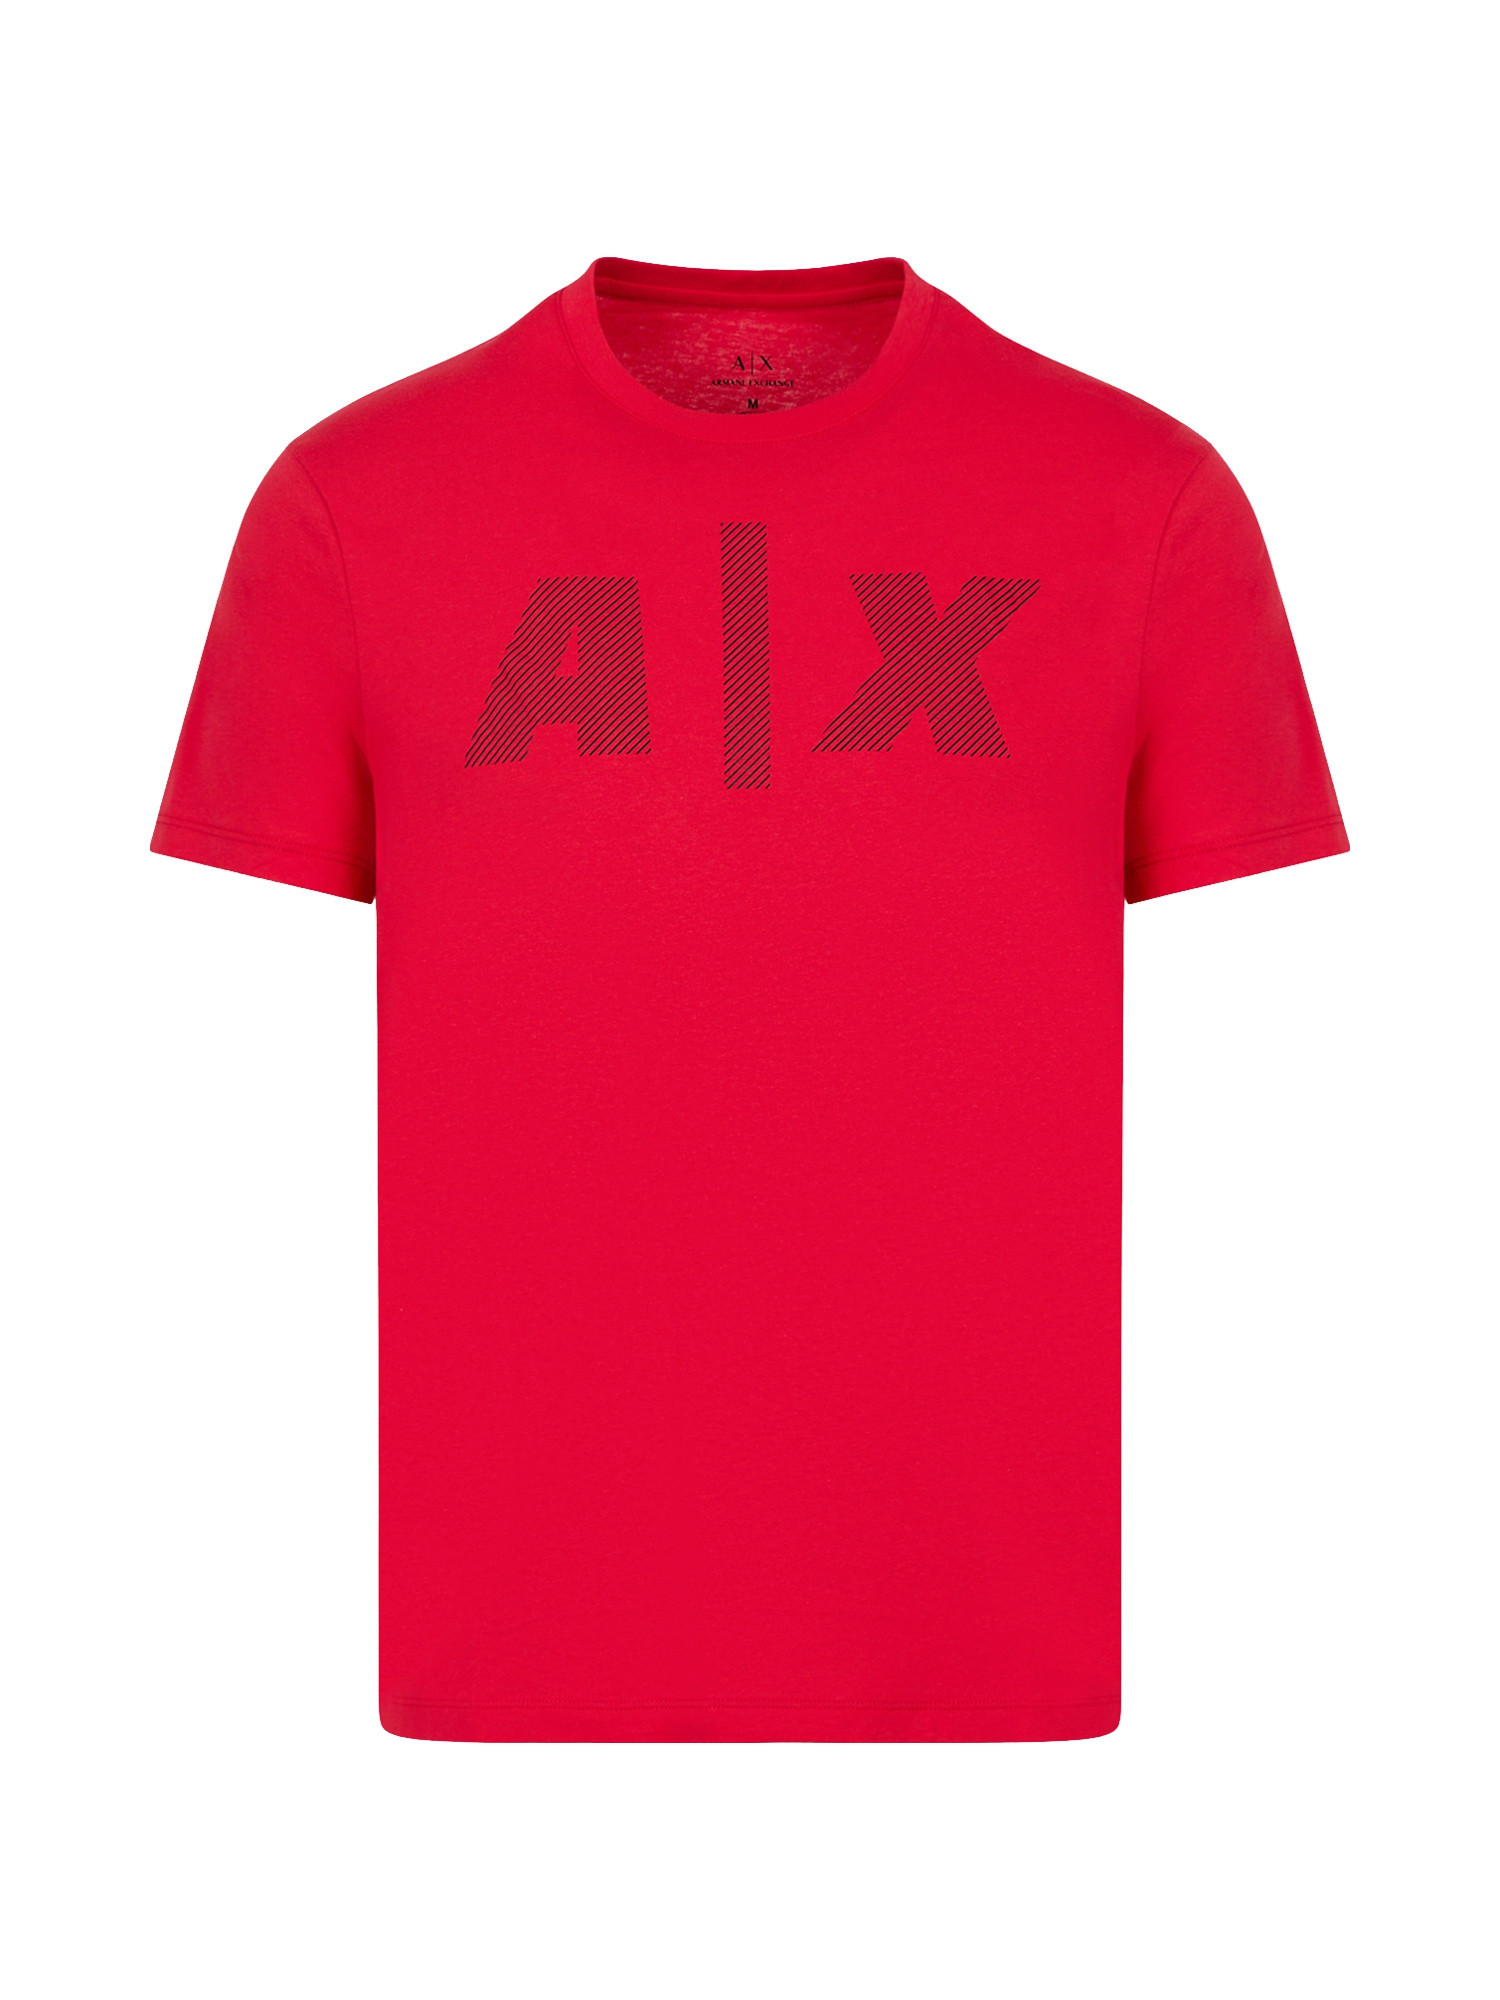 Armani Exchange - Regular fit T-shirt with logo print, Red, large image number 0